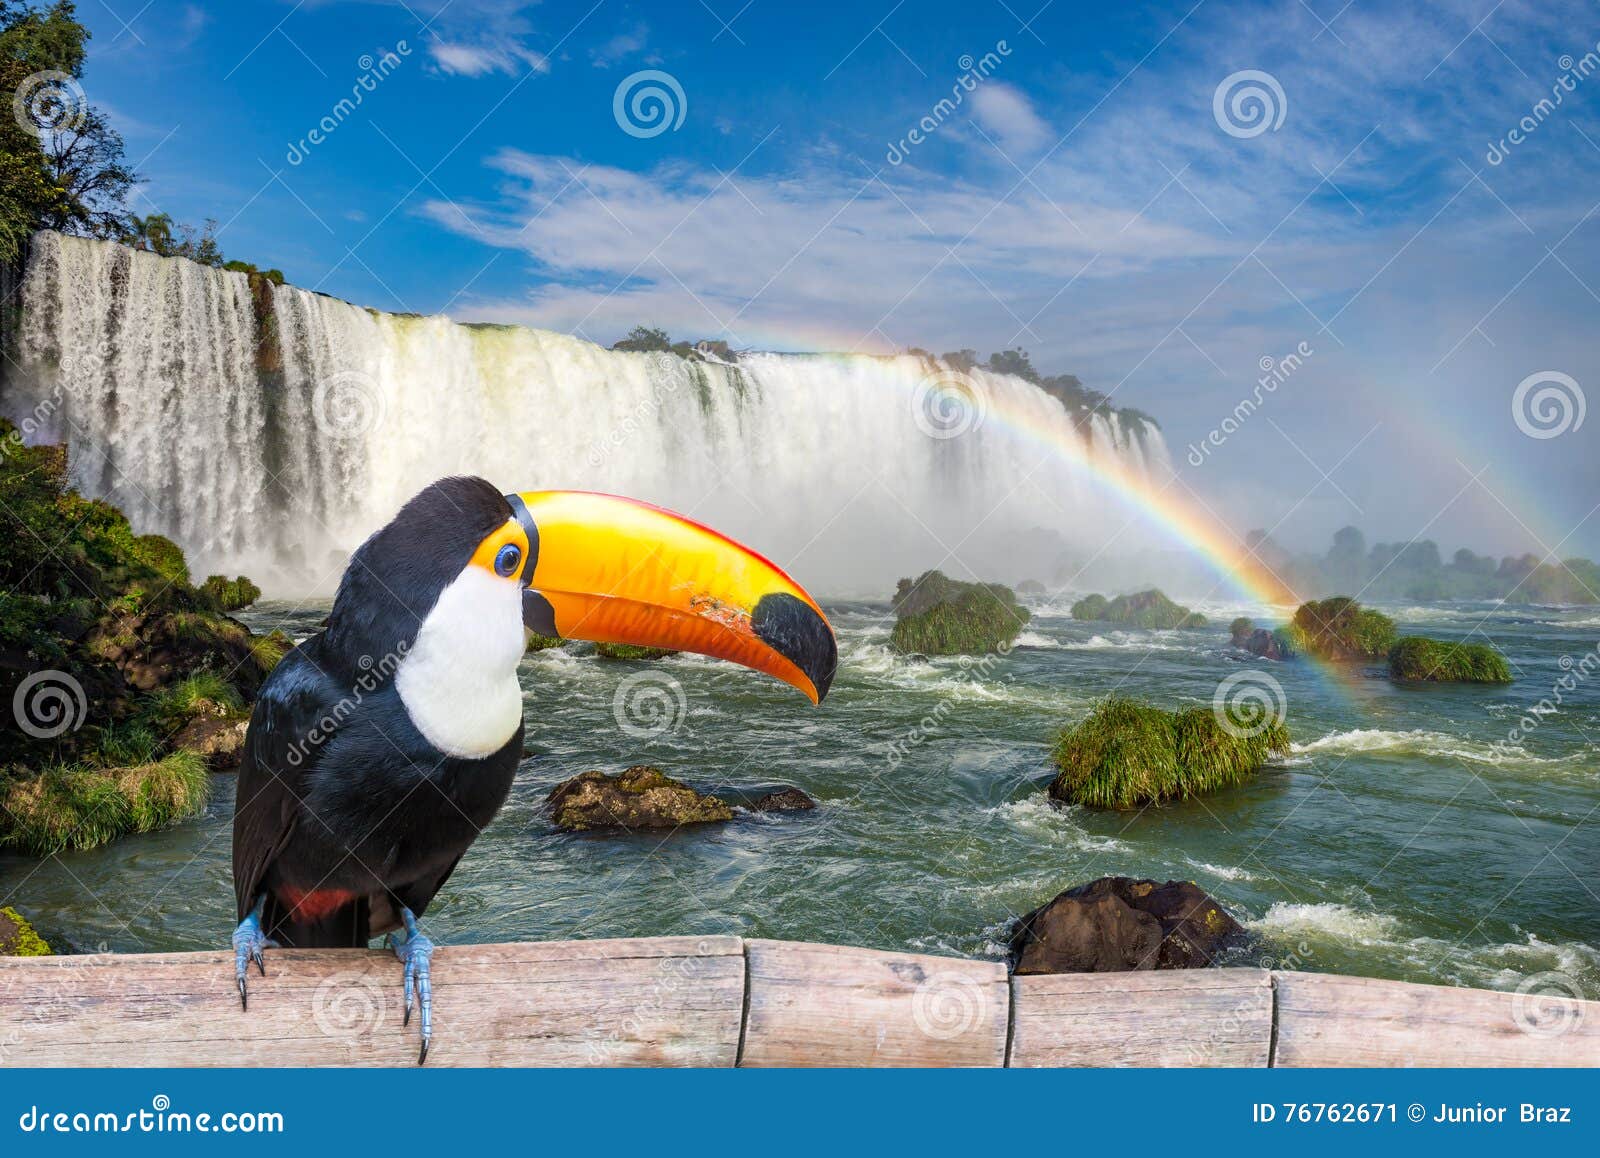 toucan at the majestic cataratas iguasu falls